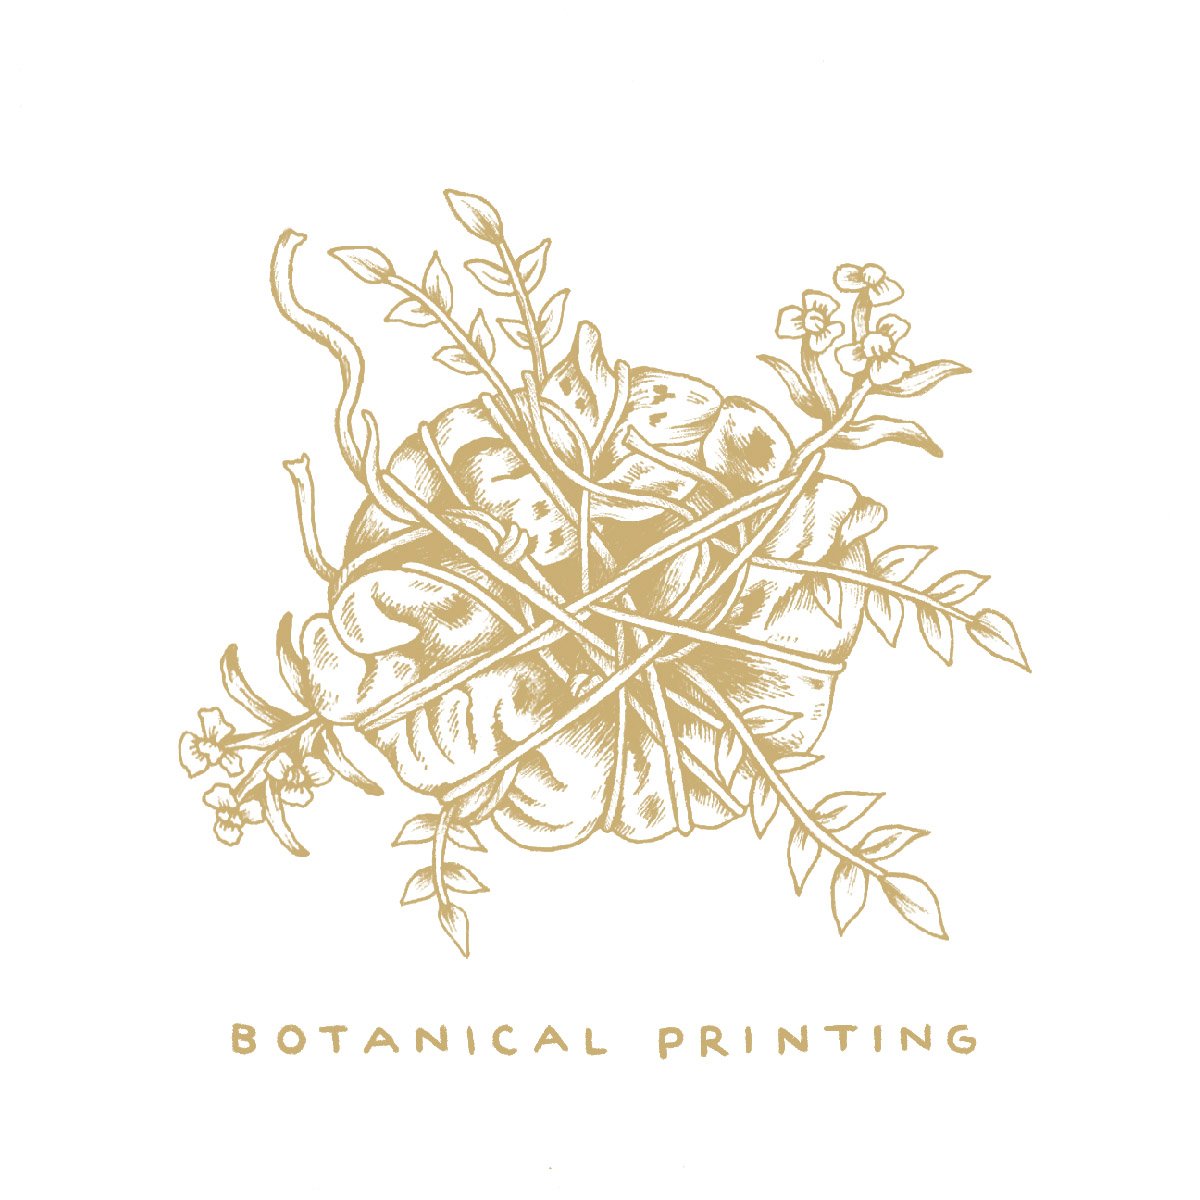 BotanicalPrinting gold illustration.jpg